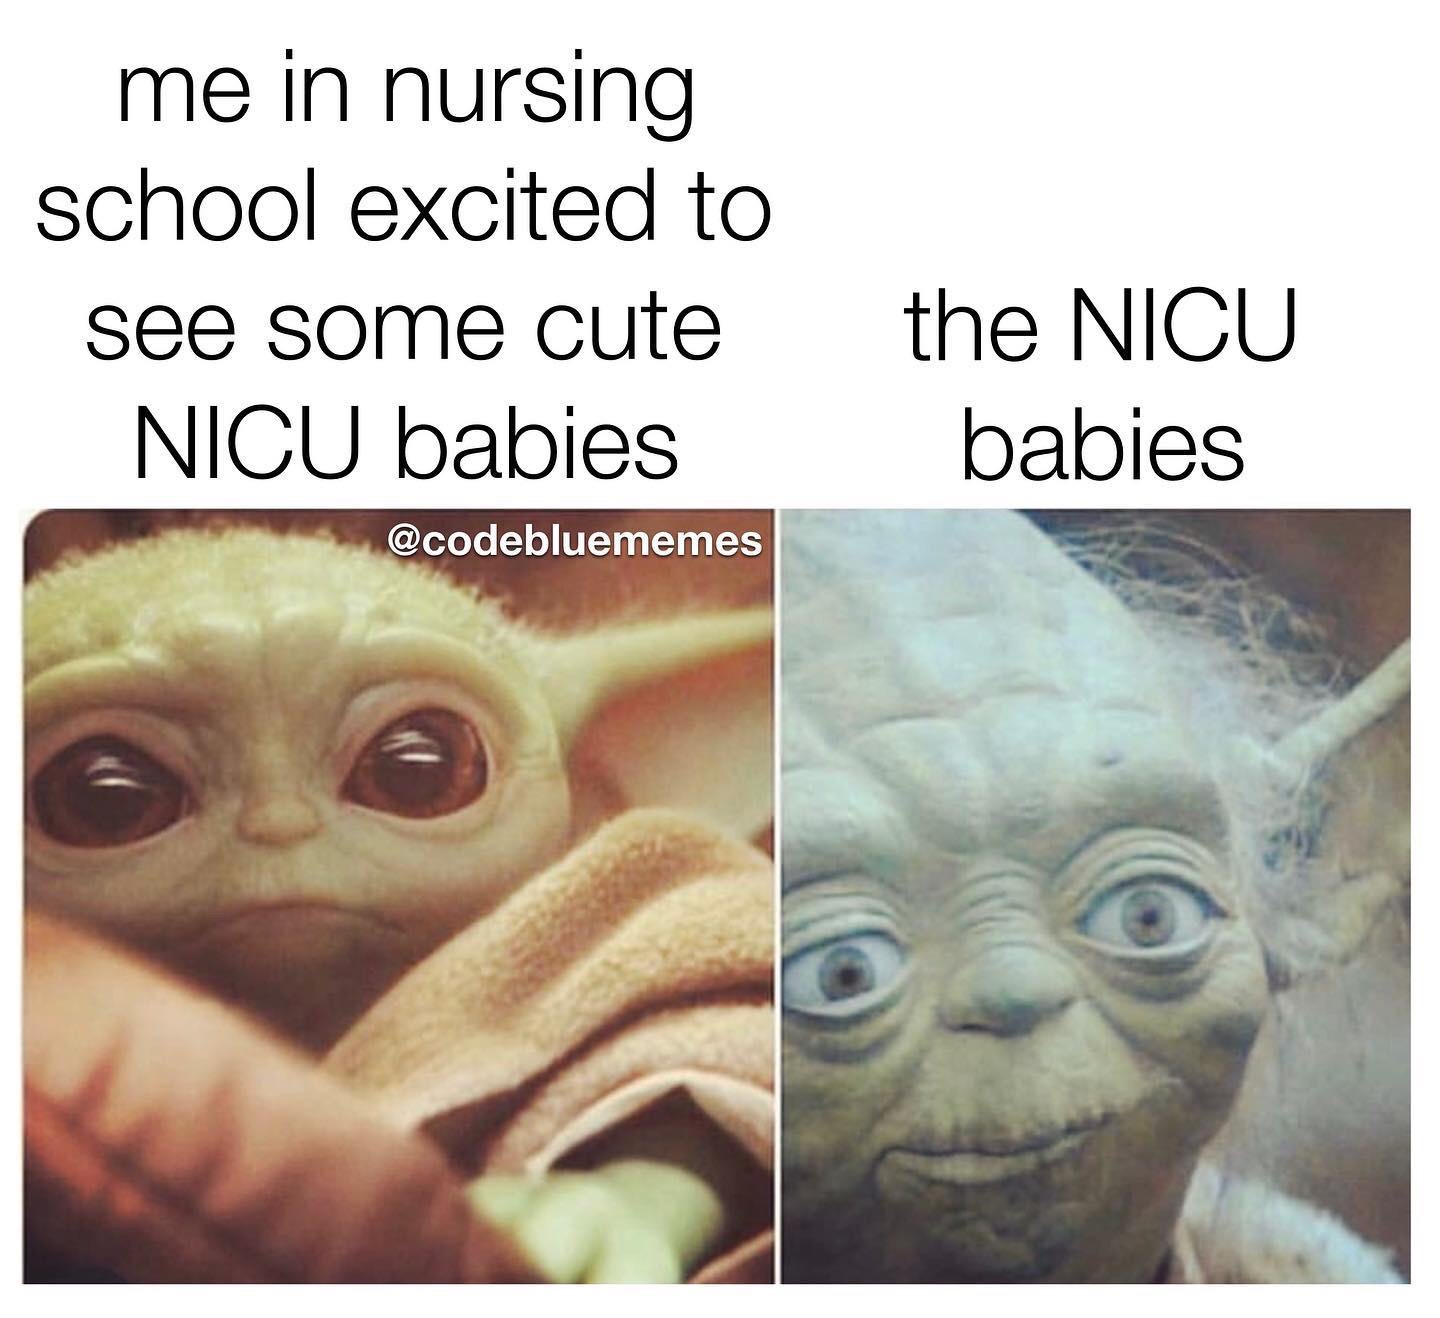 abbott medical optics inc. - me in nursing school excited to see some cute Nicu babies the Nicu babies